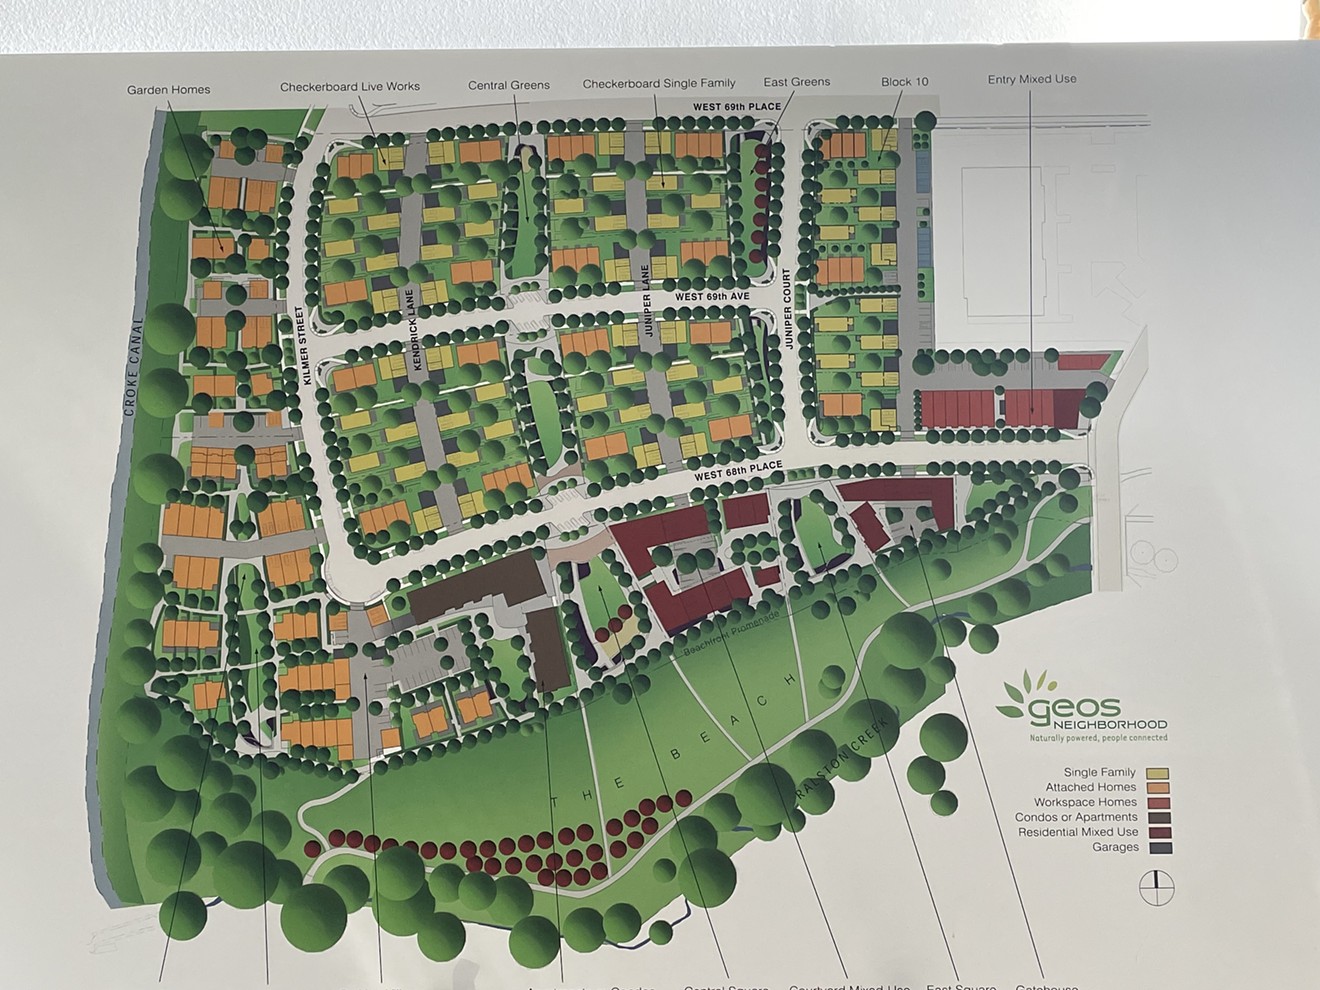 Norbert Klebl's original plan for the Geos neighborhood.